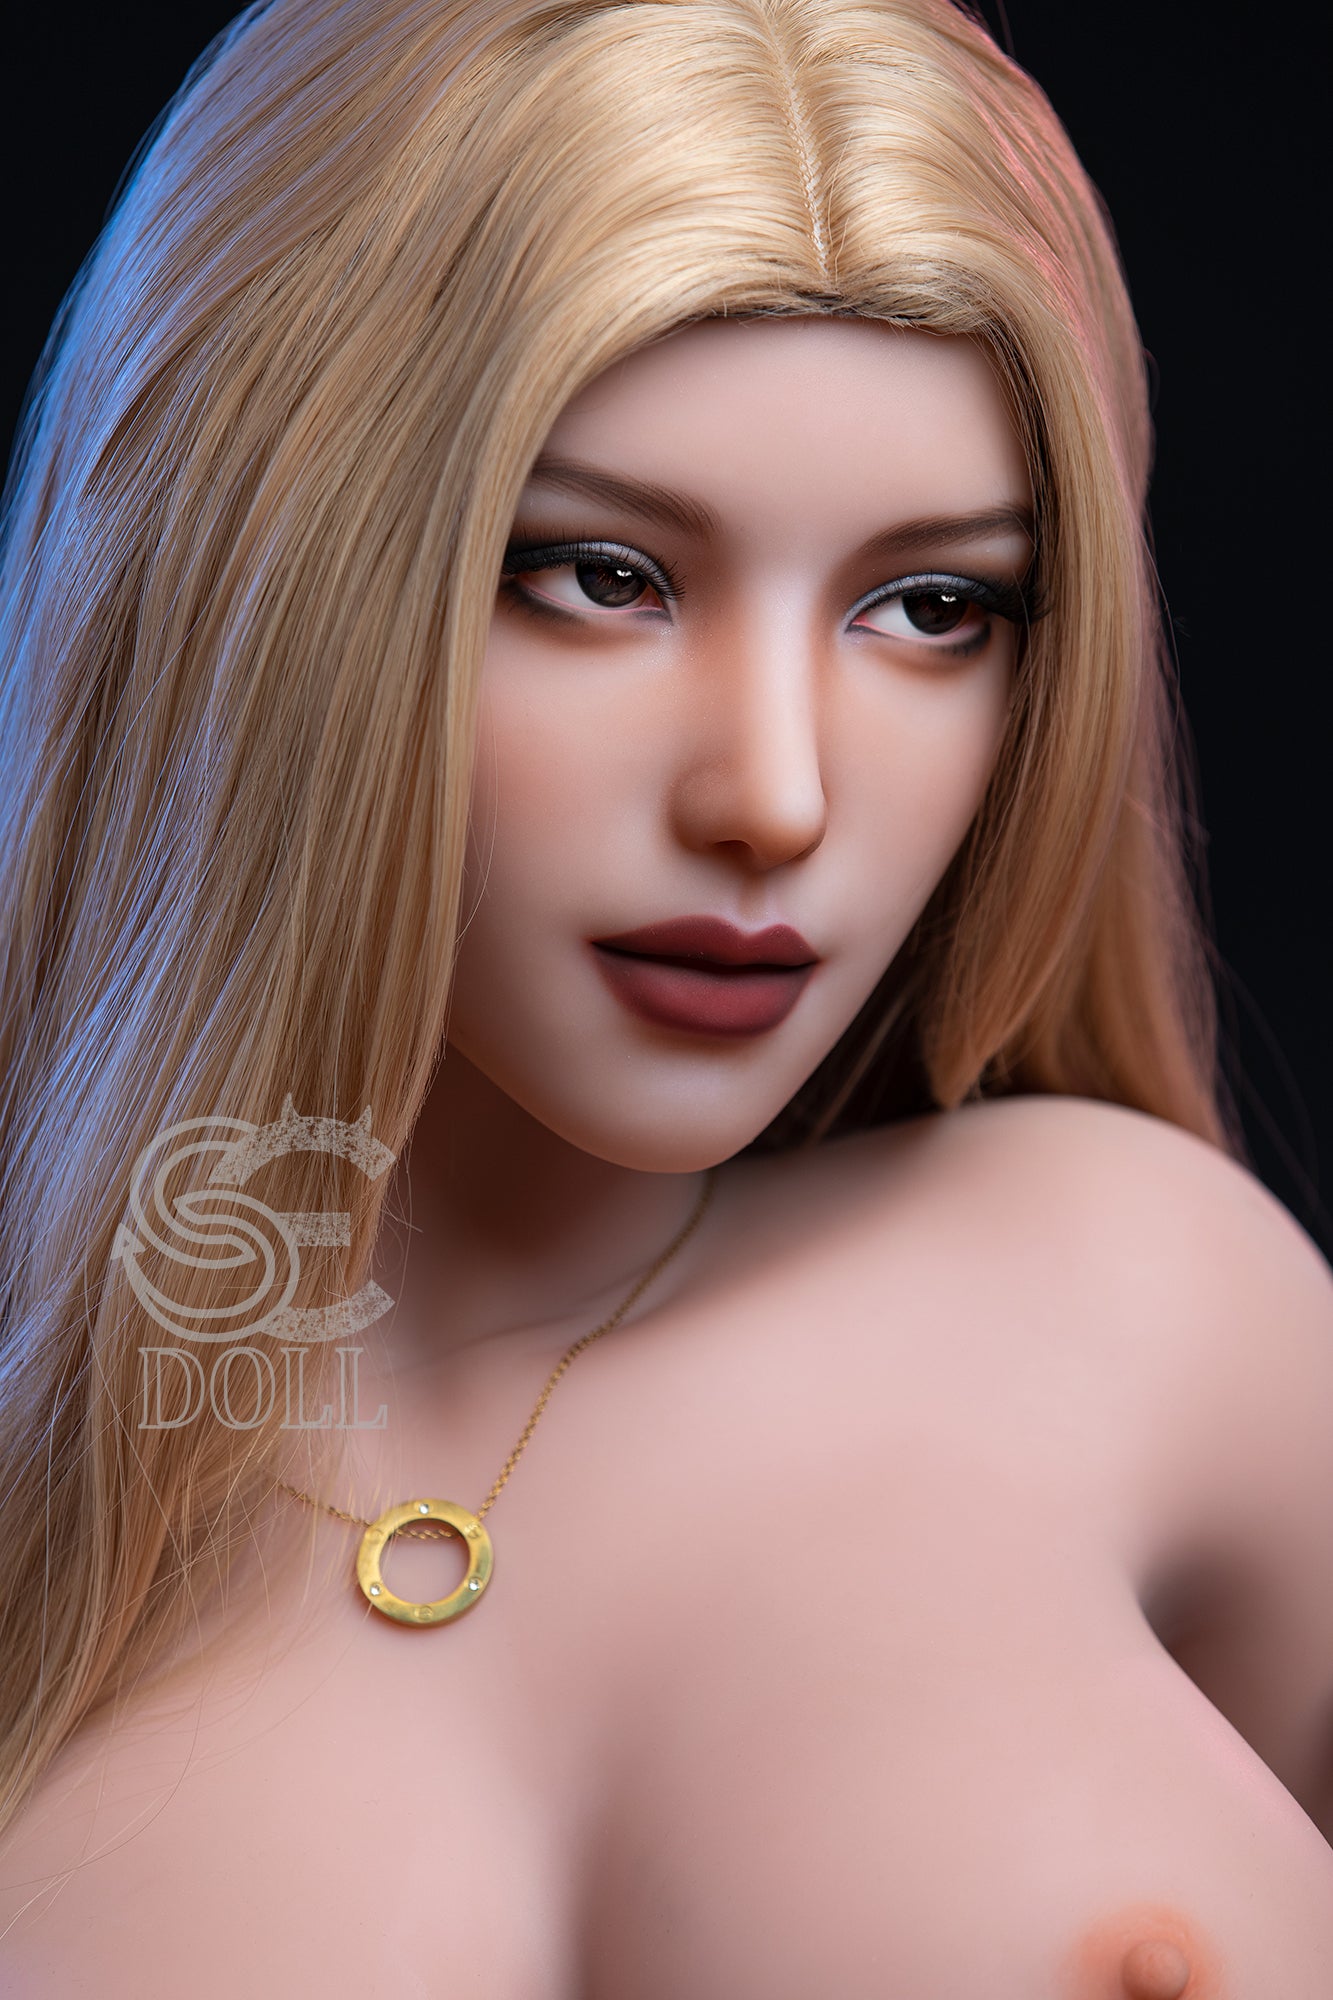 SEDOLL 157 cm H TPE - Sylvia | Buy Sex Dolls at DOLLS ACTUALLY